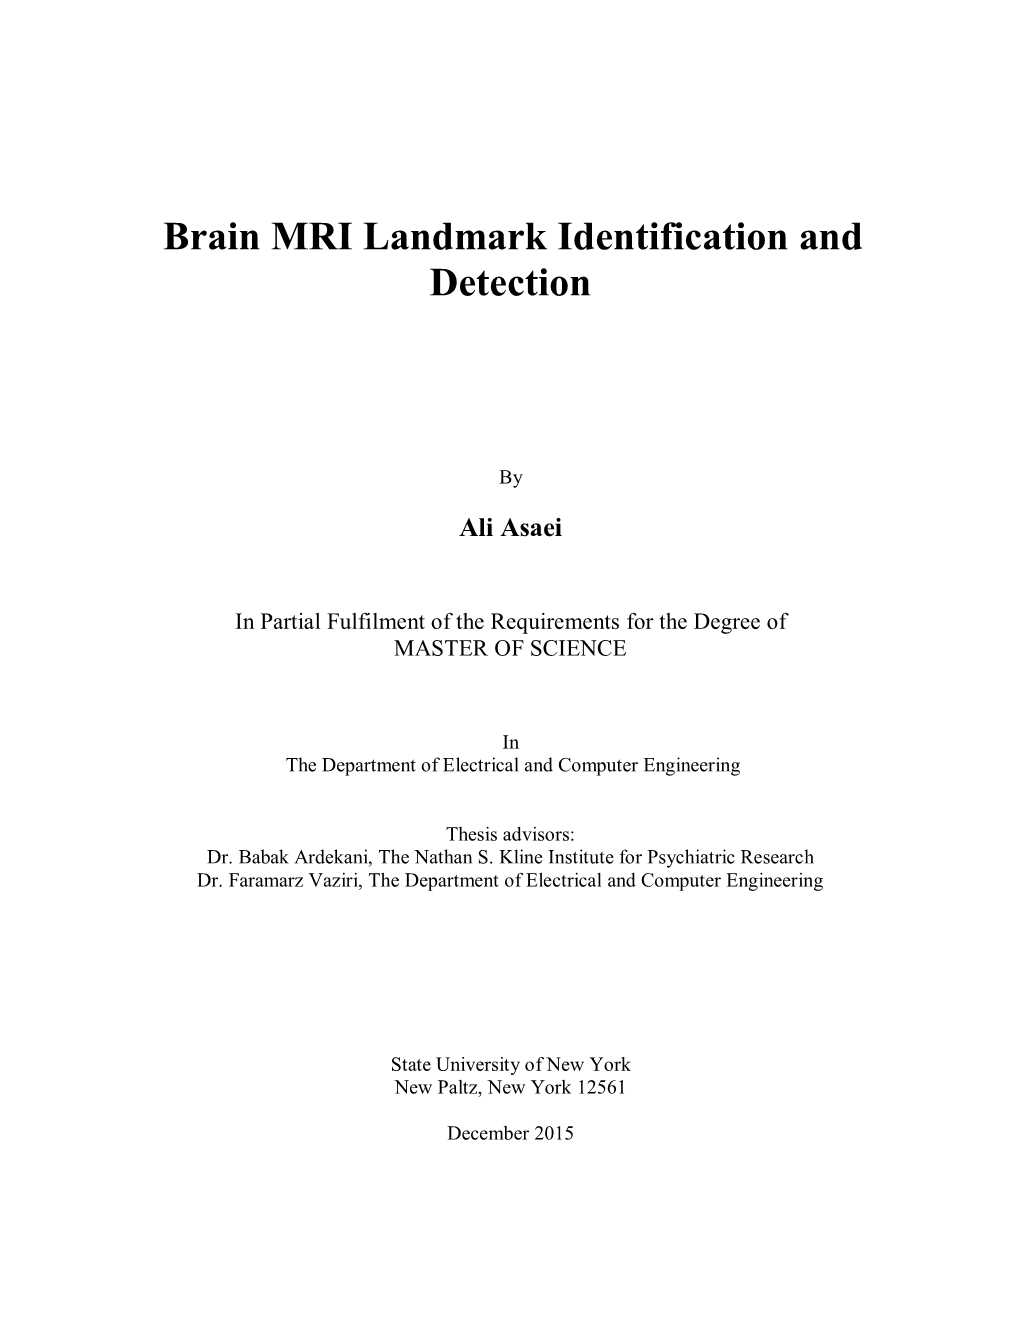 Brain MRI Landmark Identification and Detection